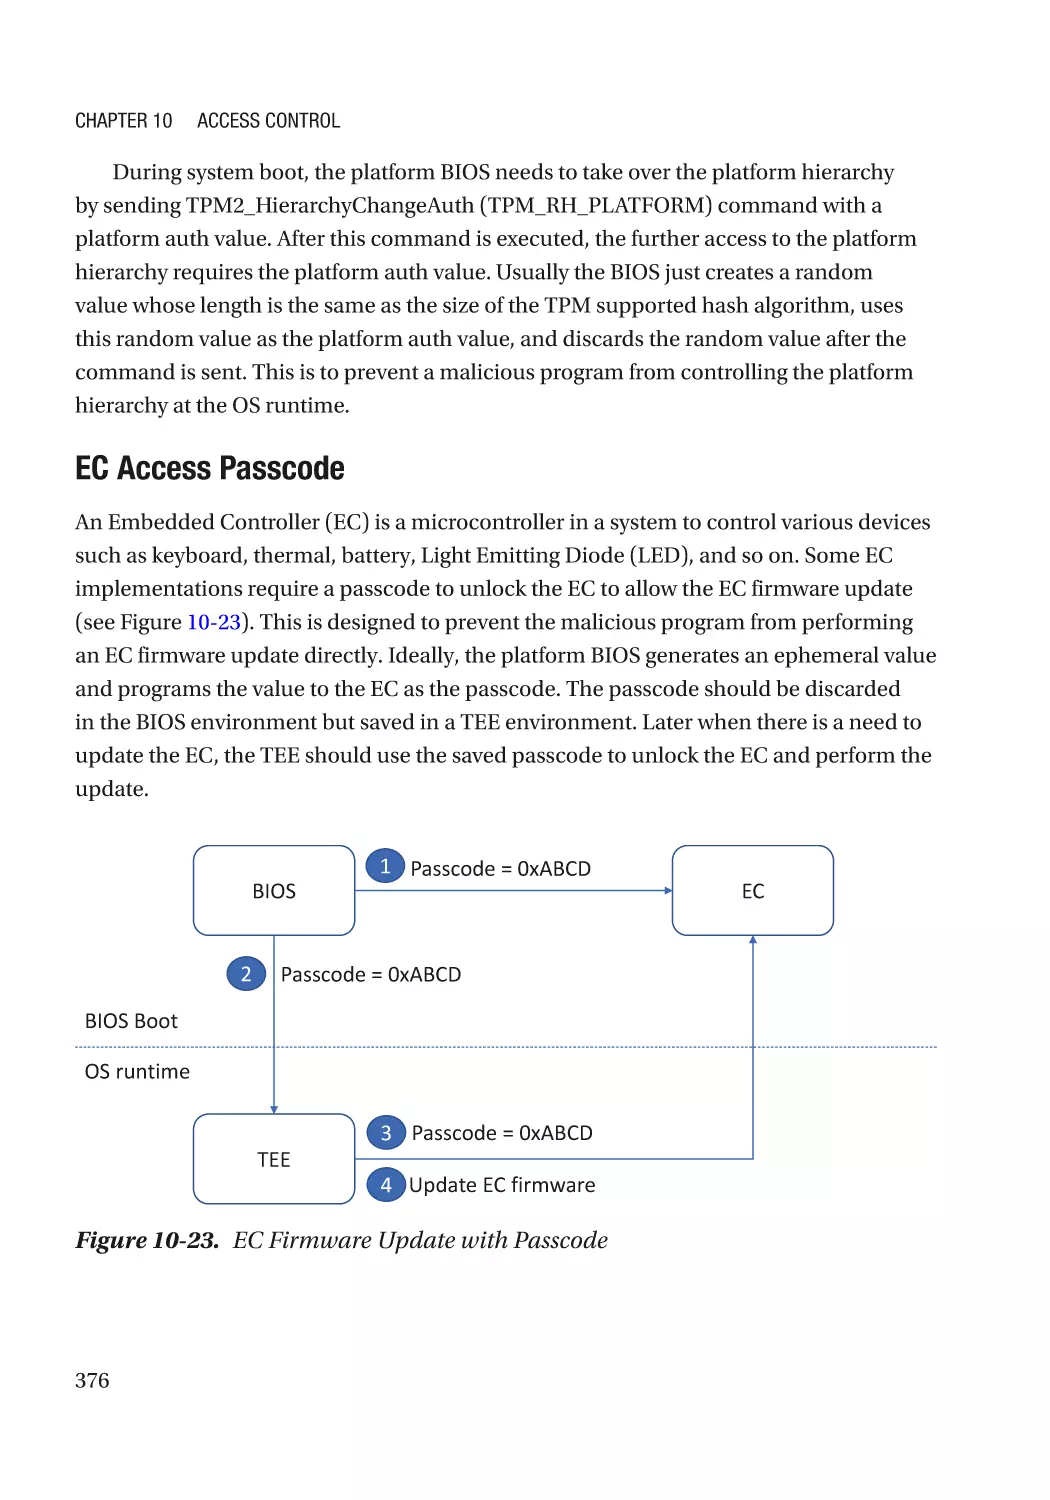 EC Access Passcode